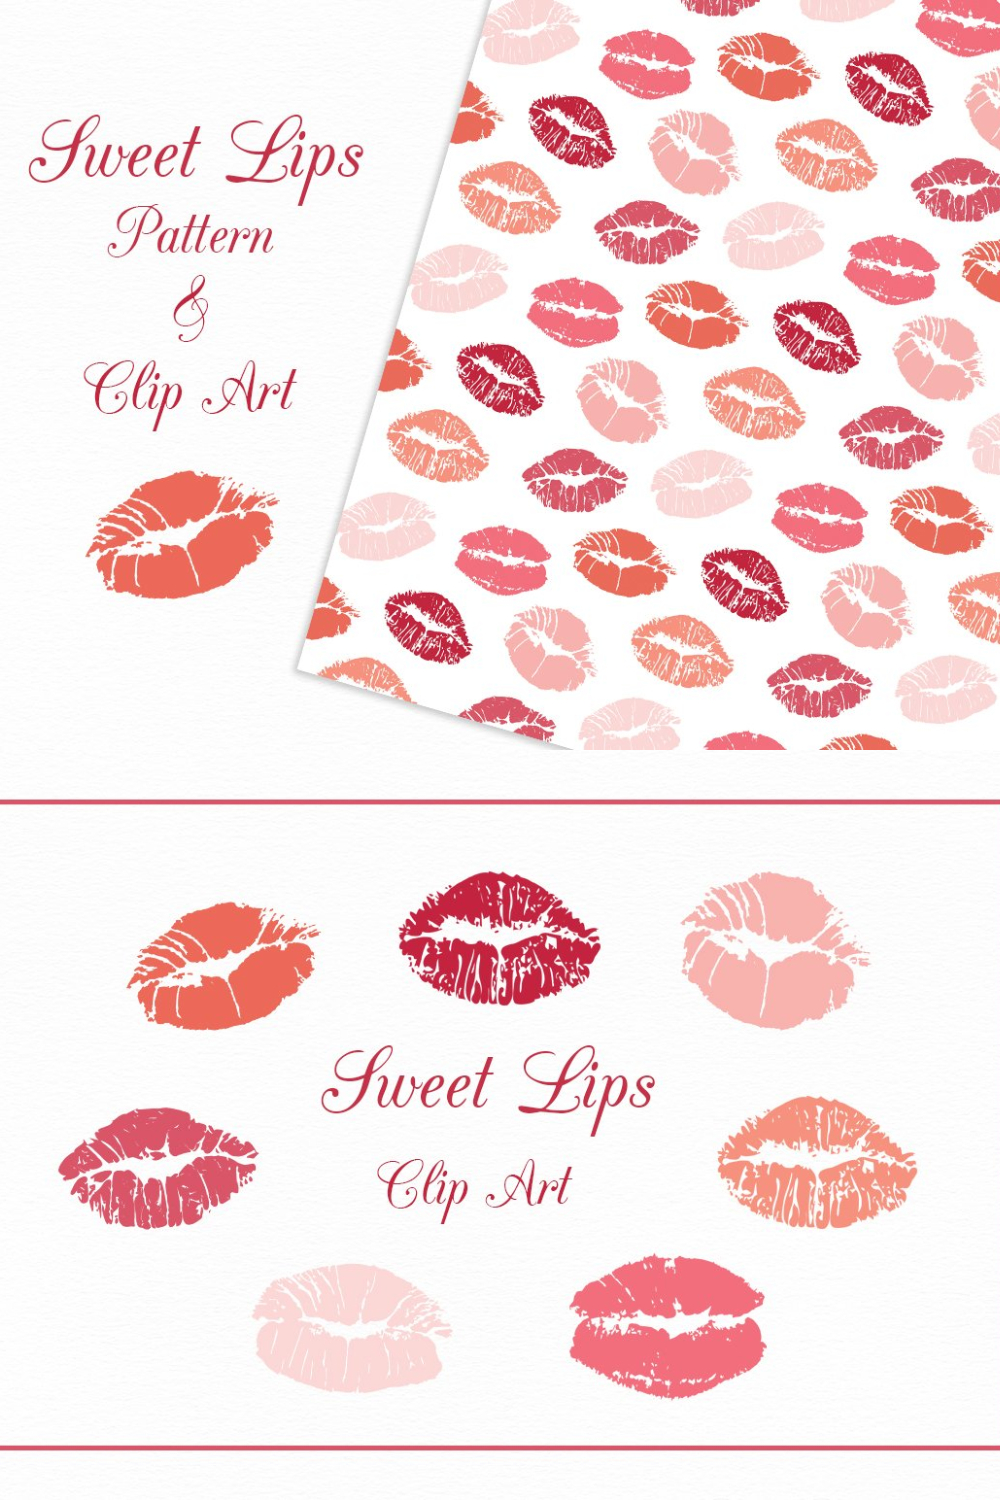 Lips Vector Pattern & Clip Art - Pinterest.